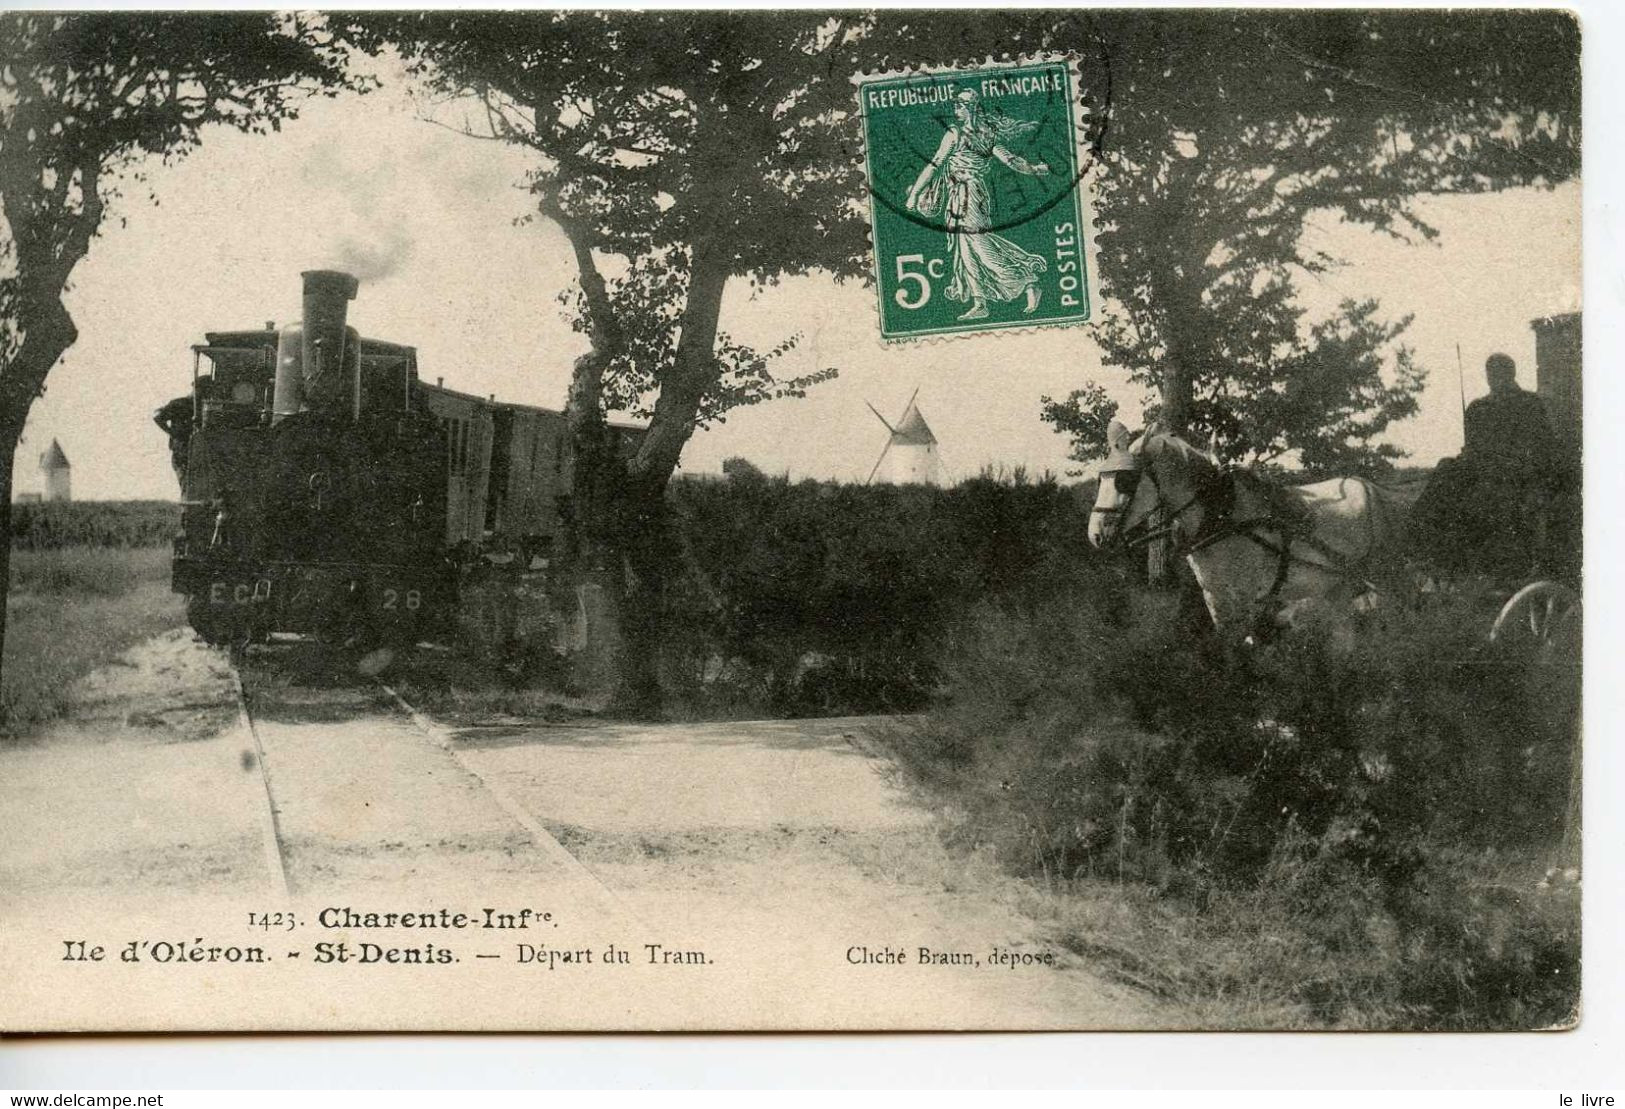 CPA 17 ILE D'OLERON. ST DENIS. DEPART DU TRAM 1910